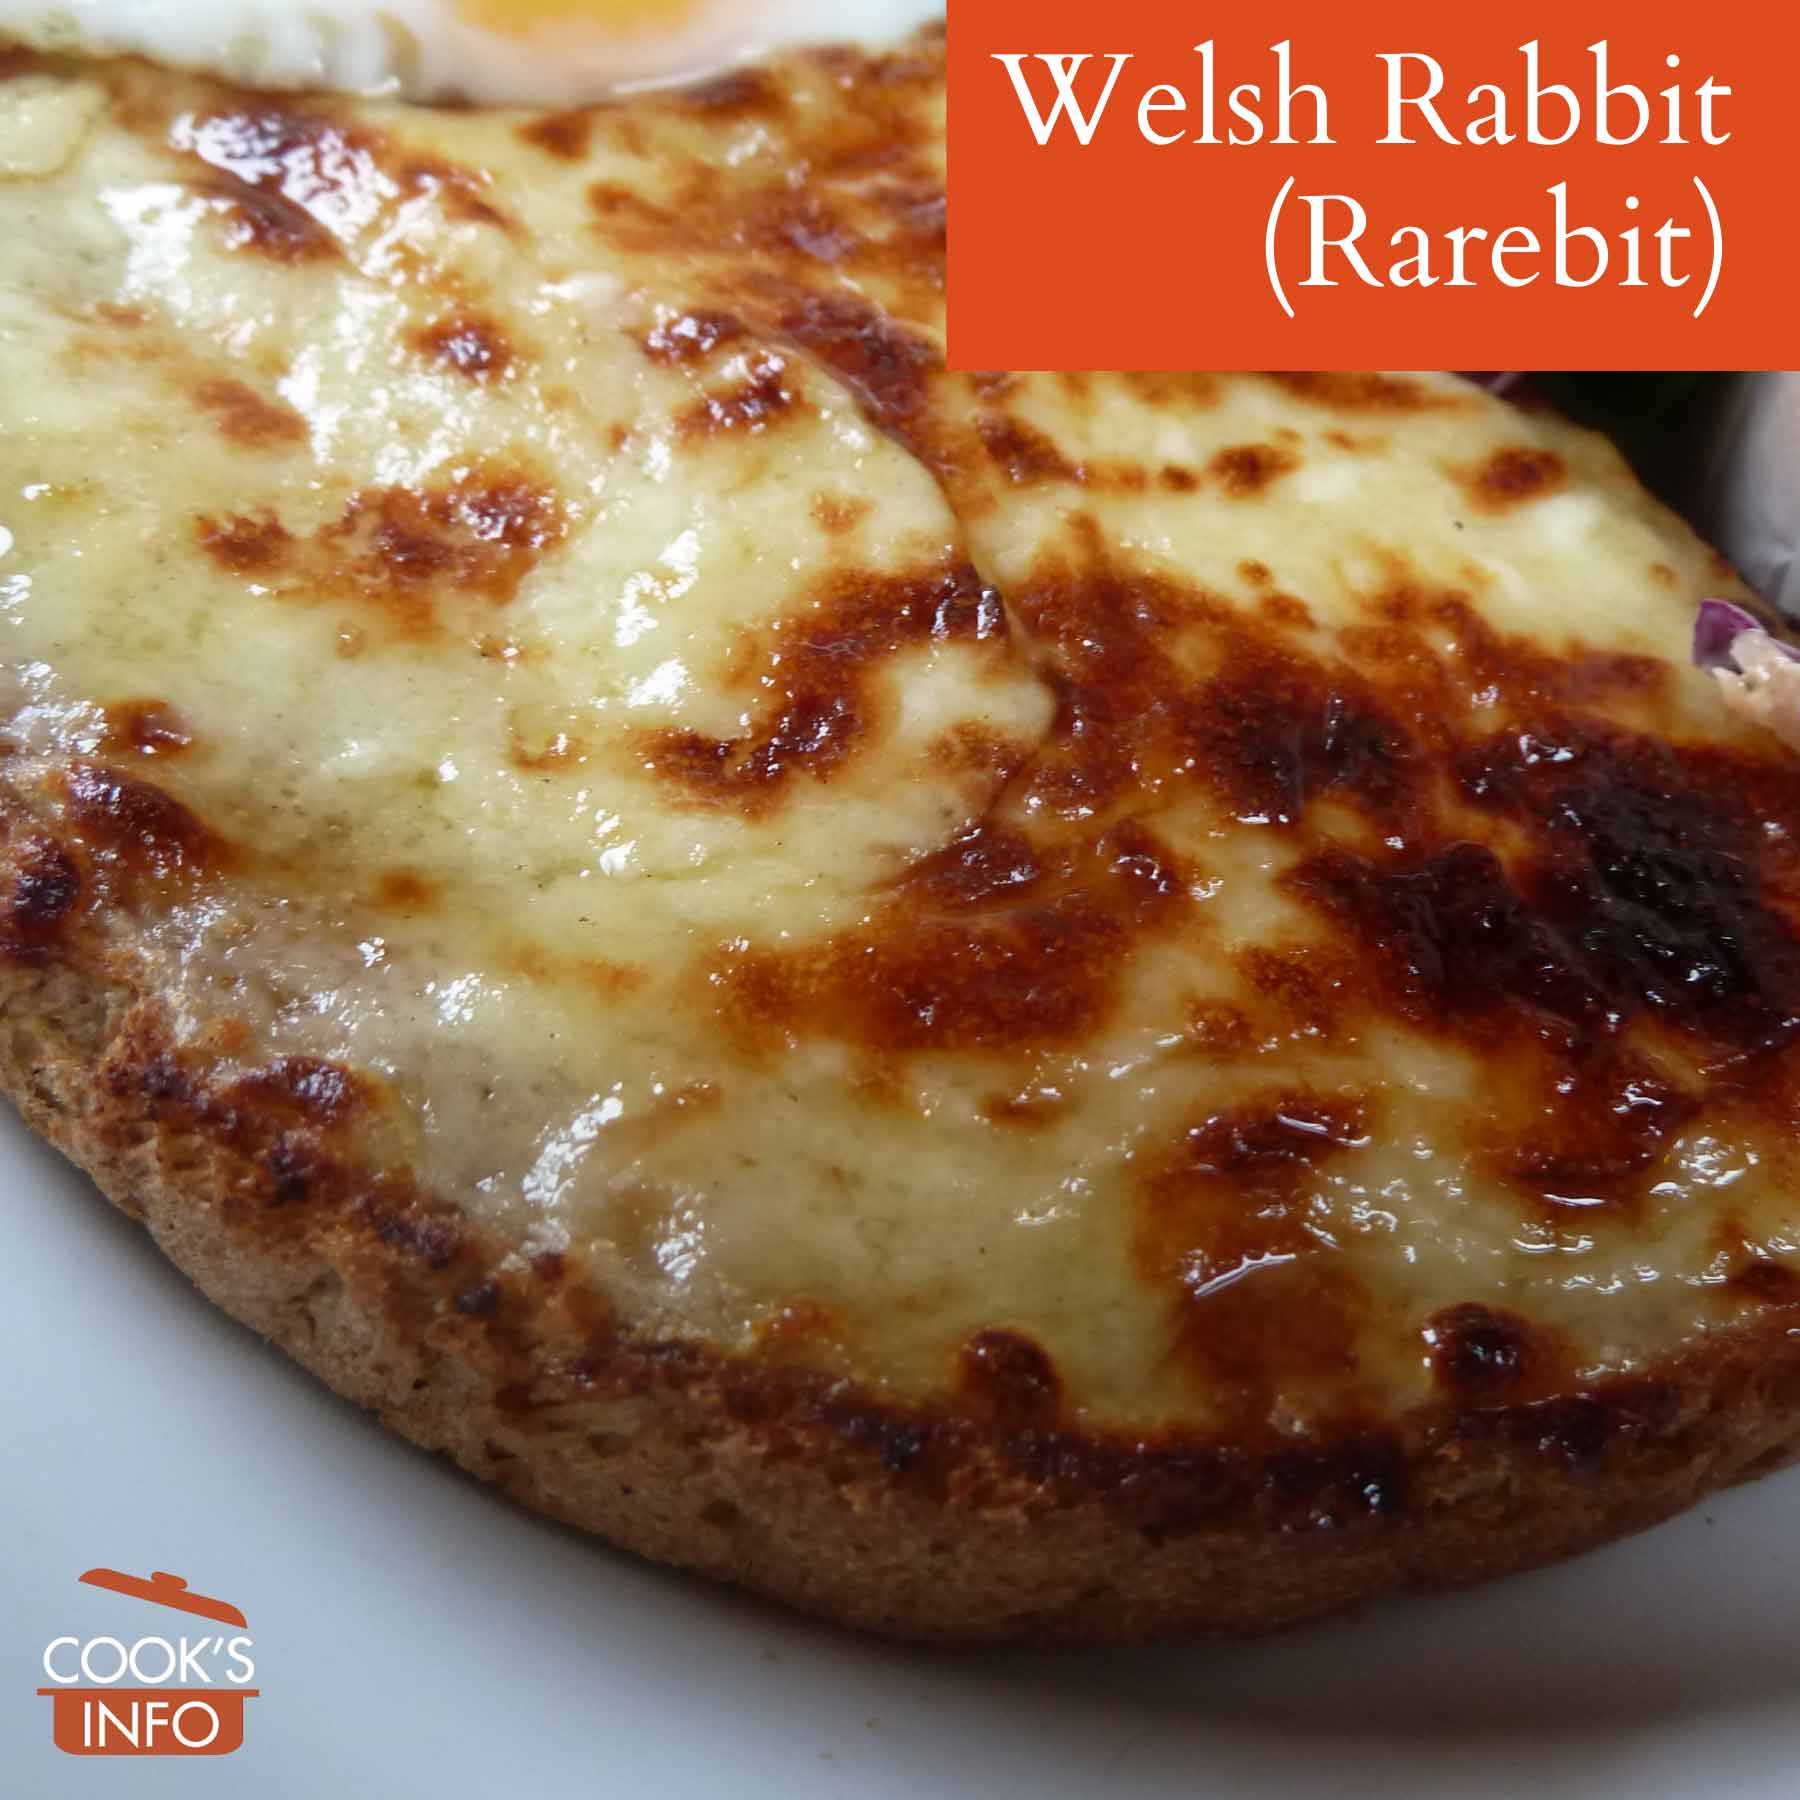 Welsh Rabbit (Rarebit)